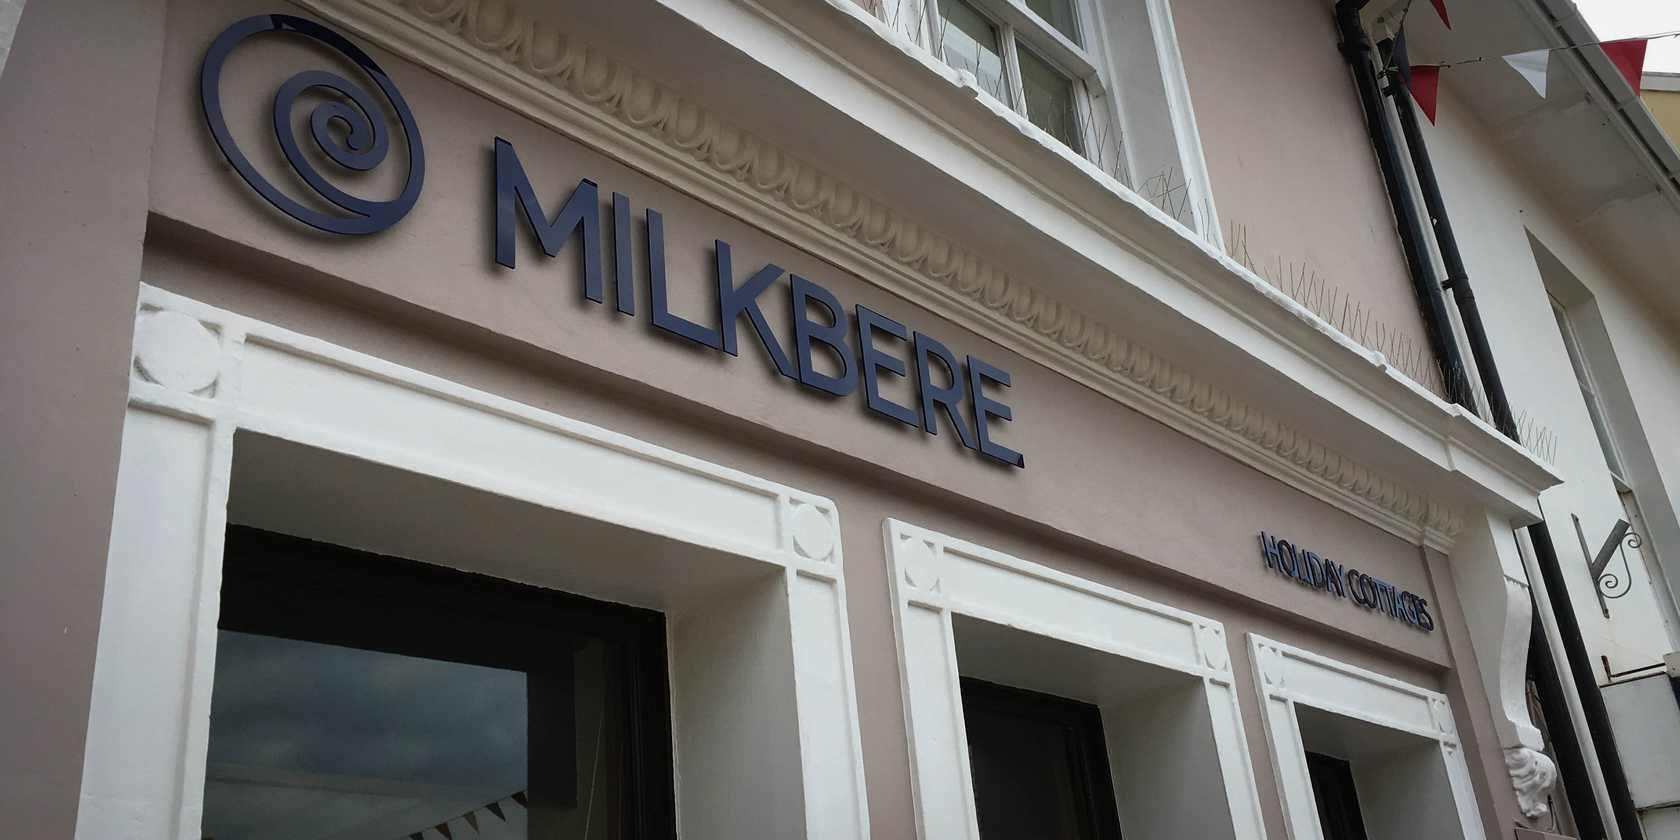 Milkbere Cottage Holidays Signage